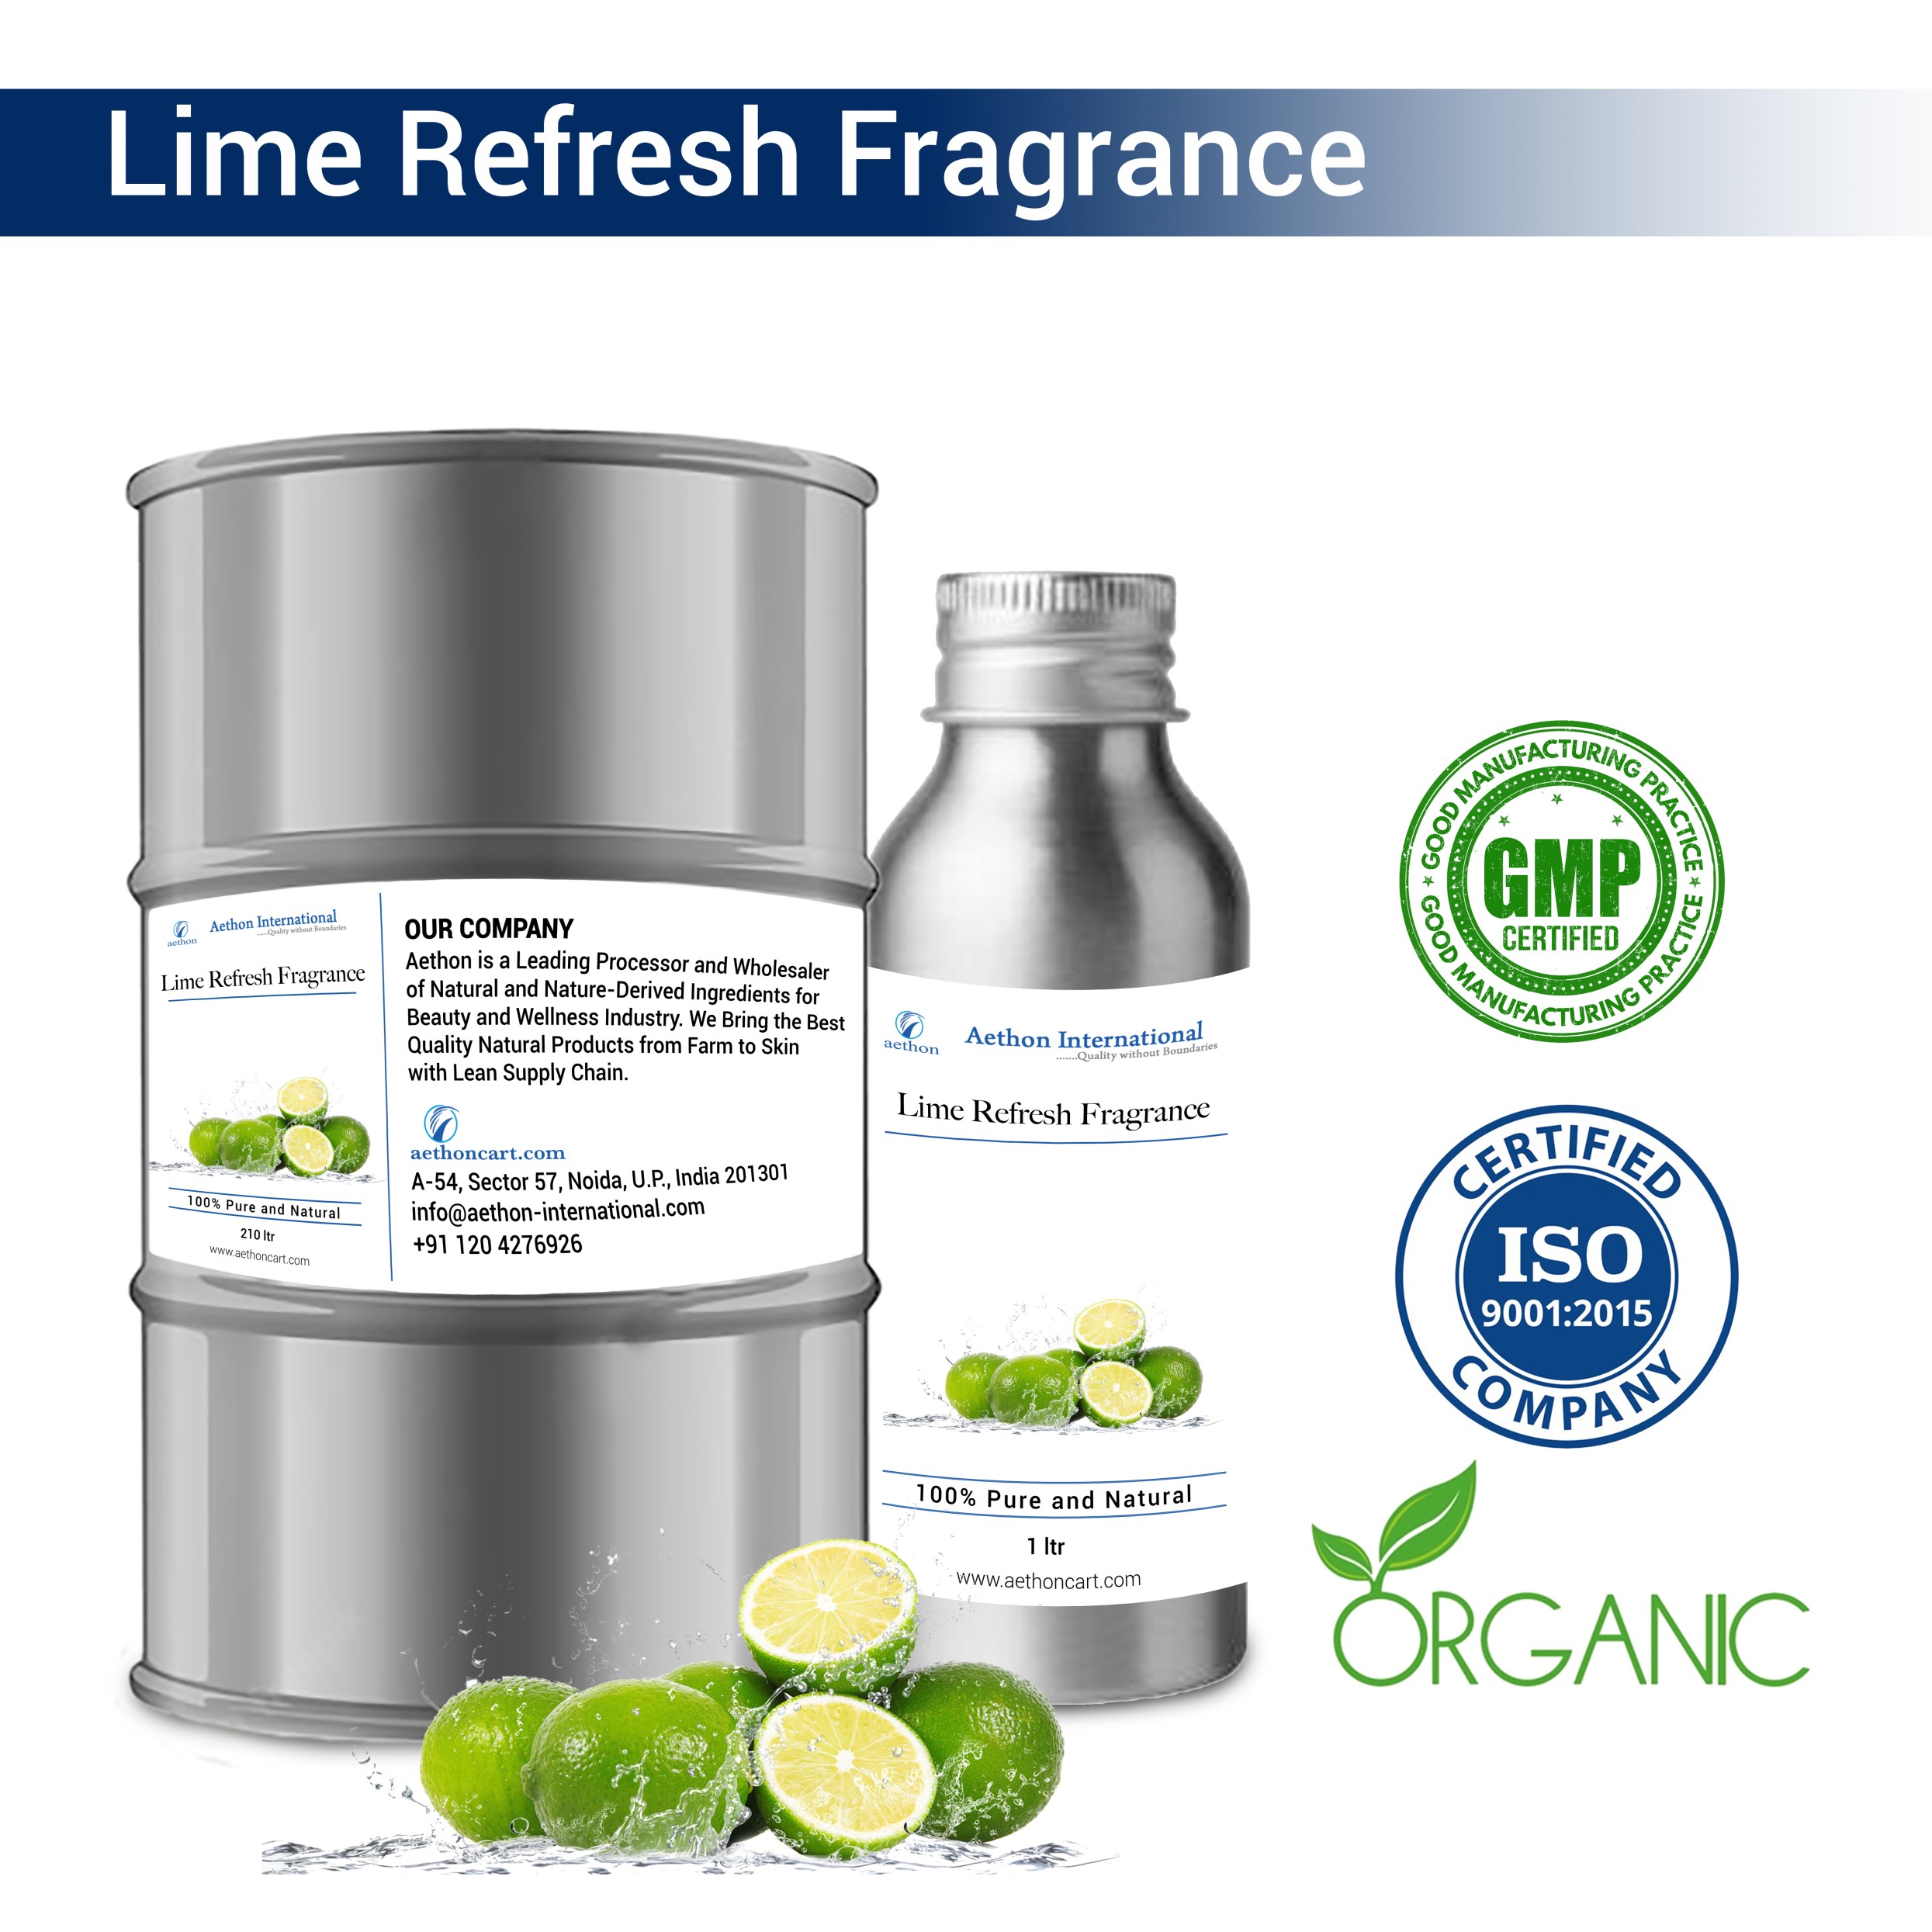 Lime Refresh Fragrance